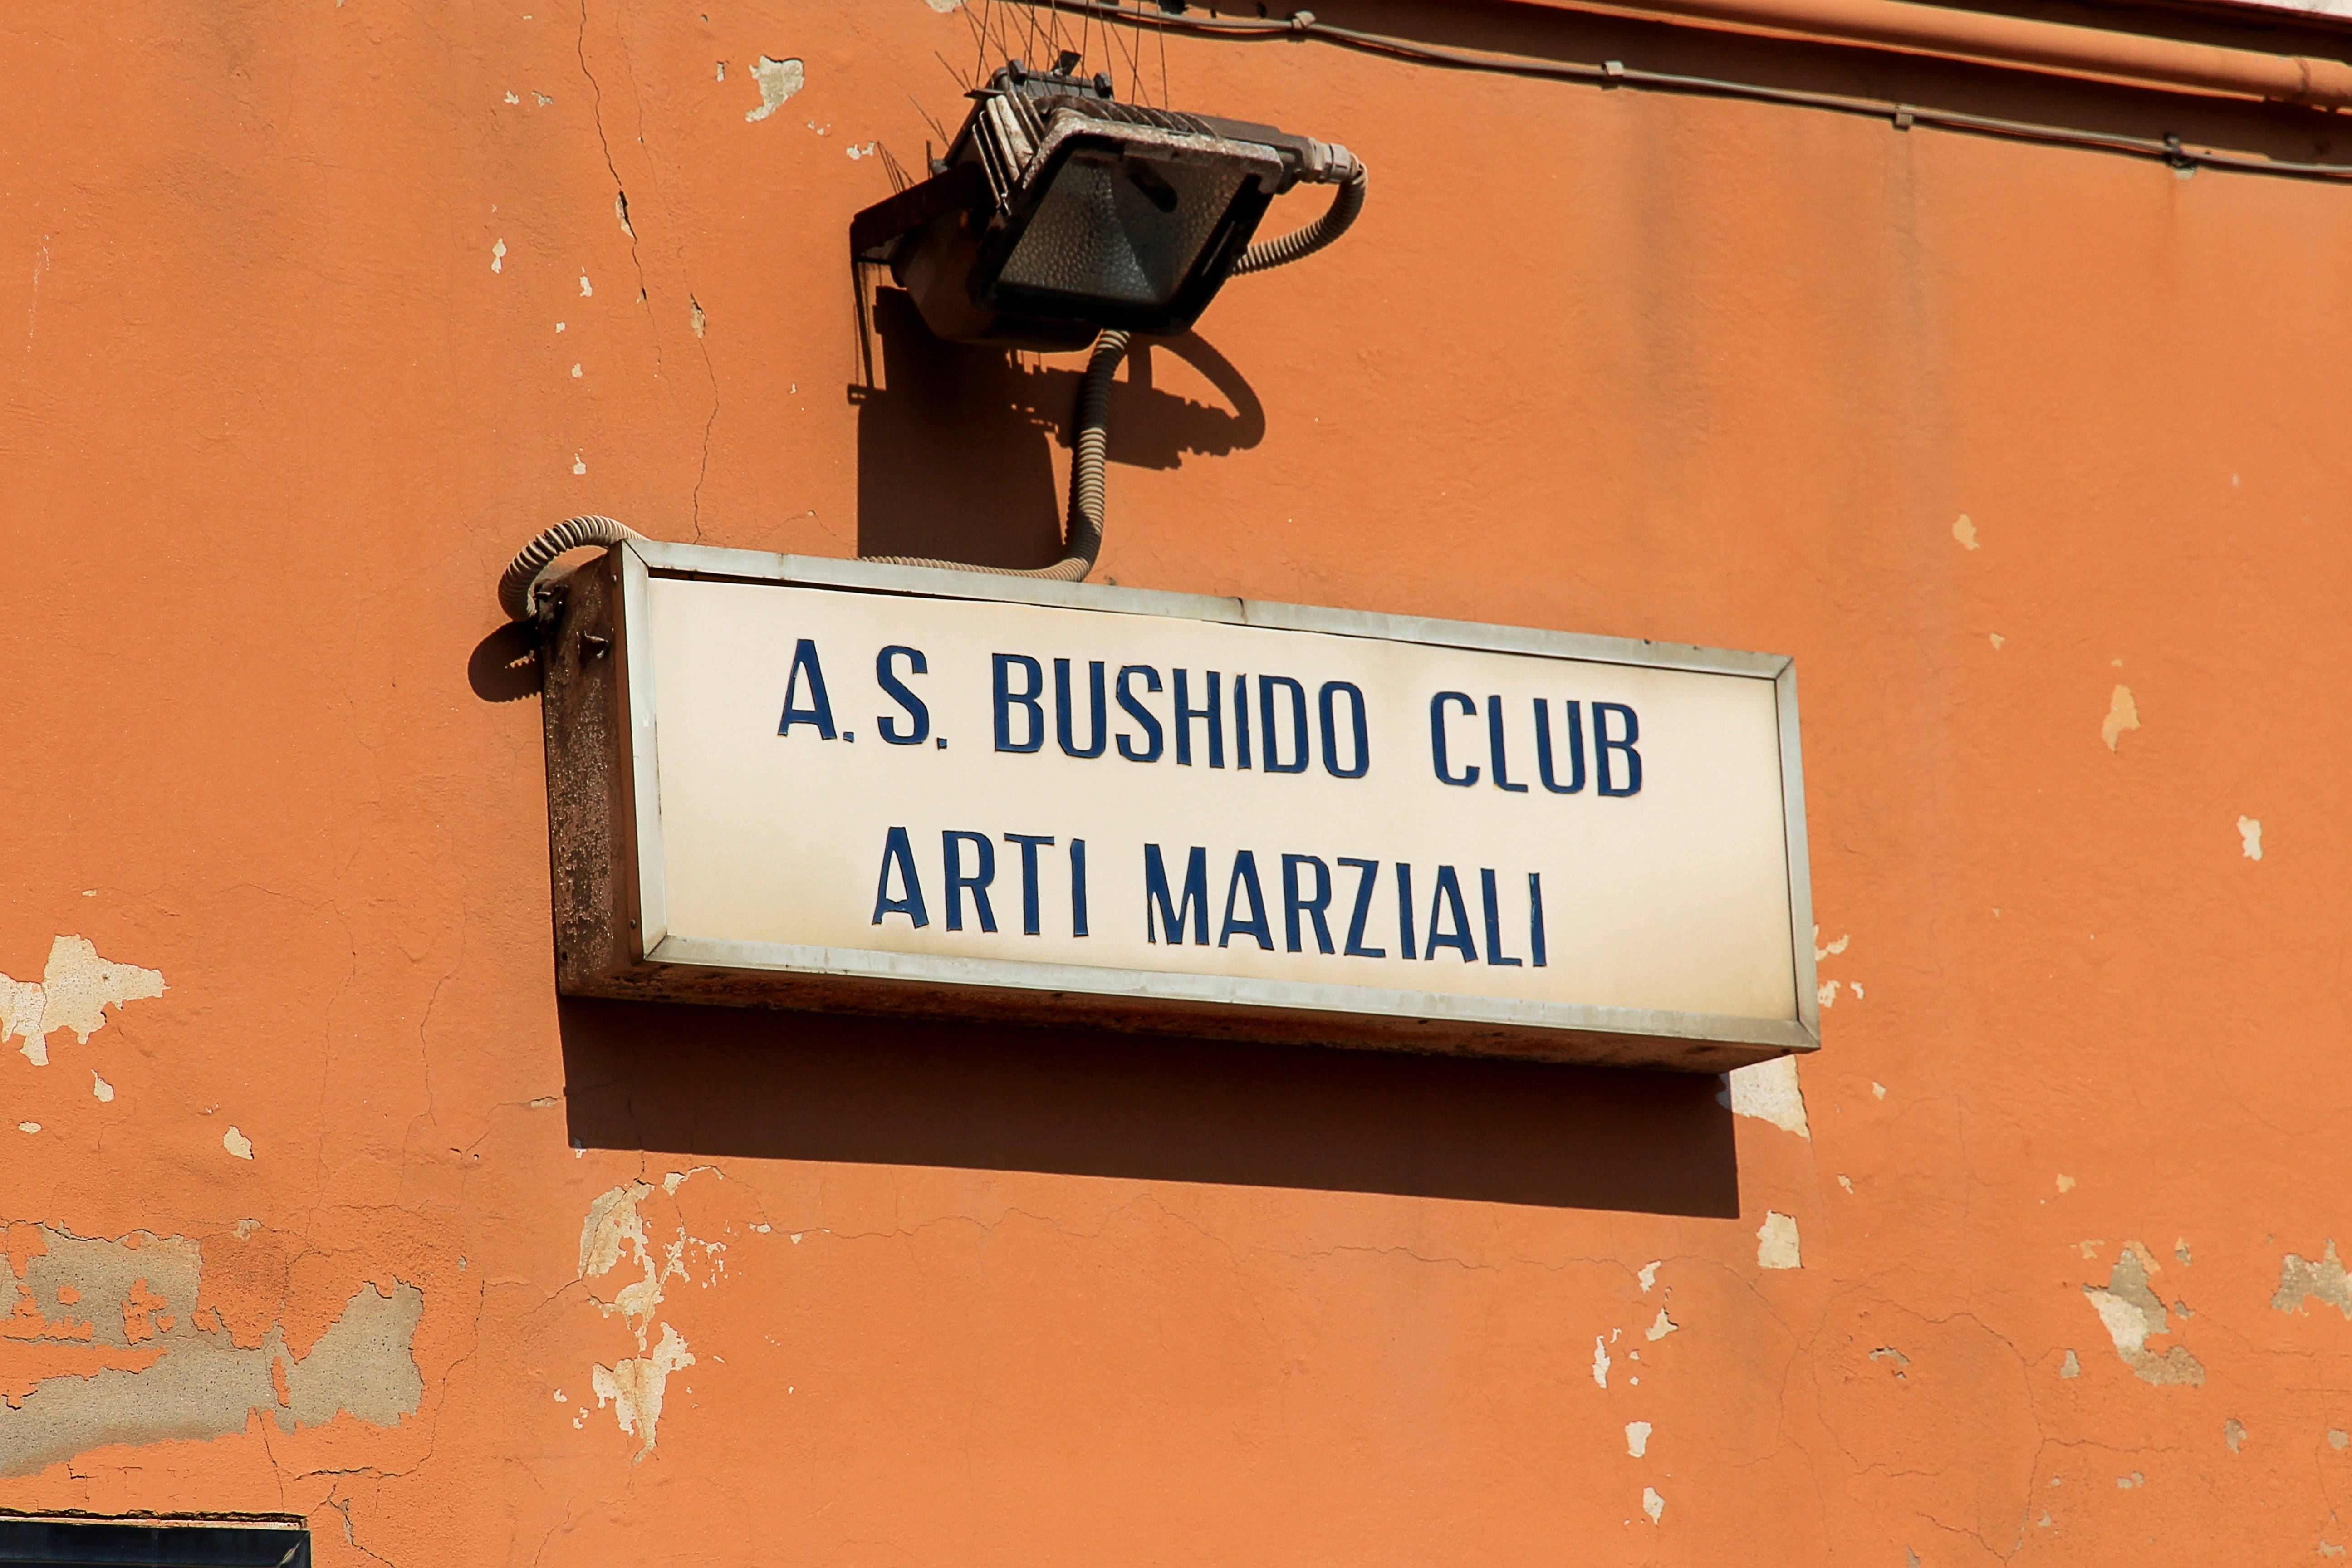 A.S bushido club arti marziali signboard